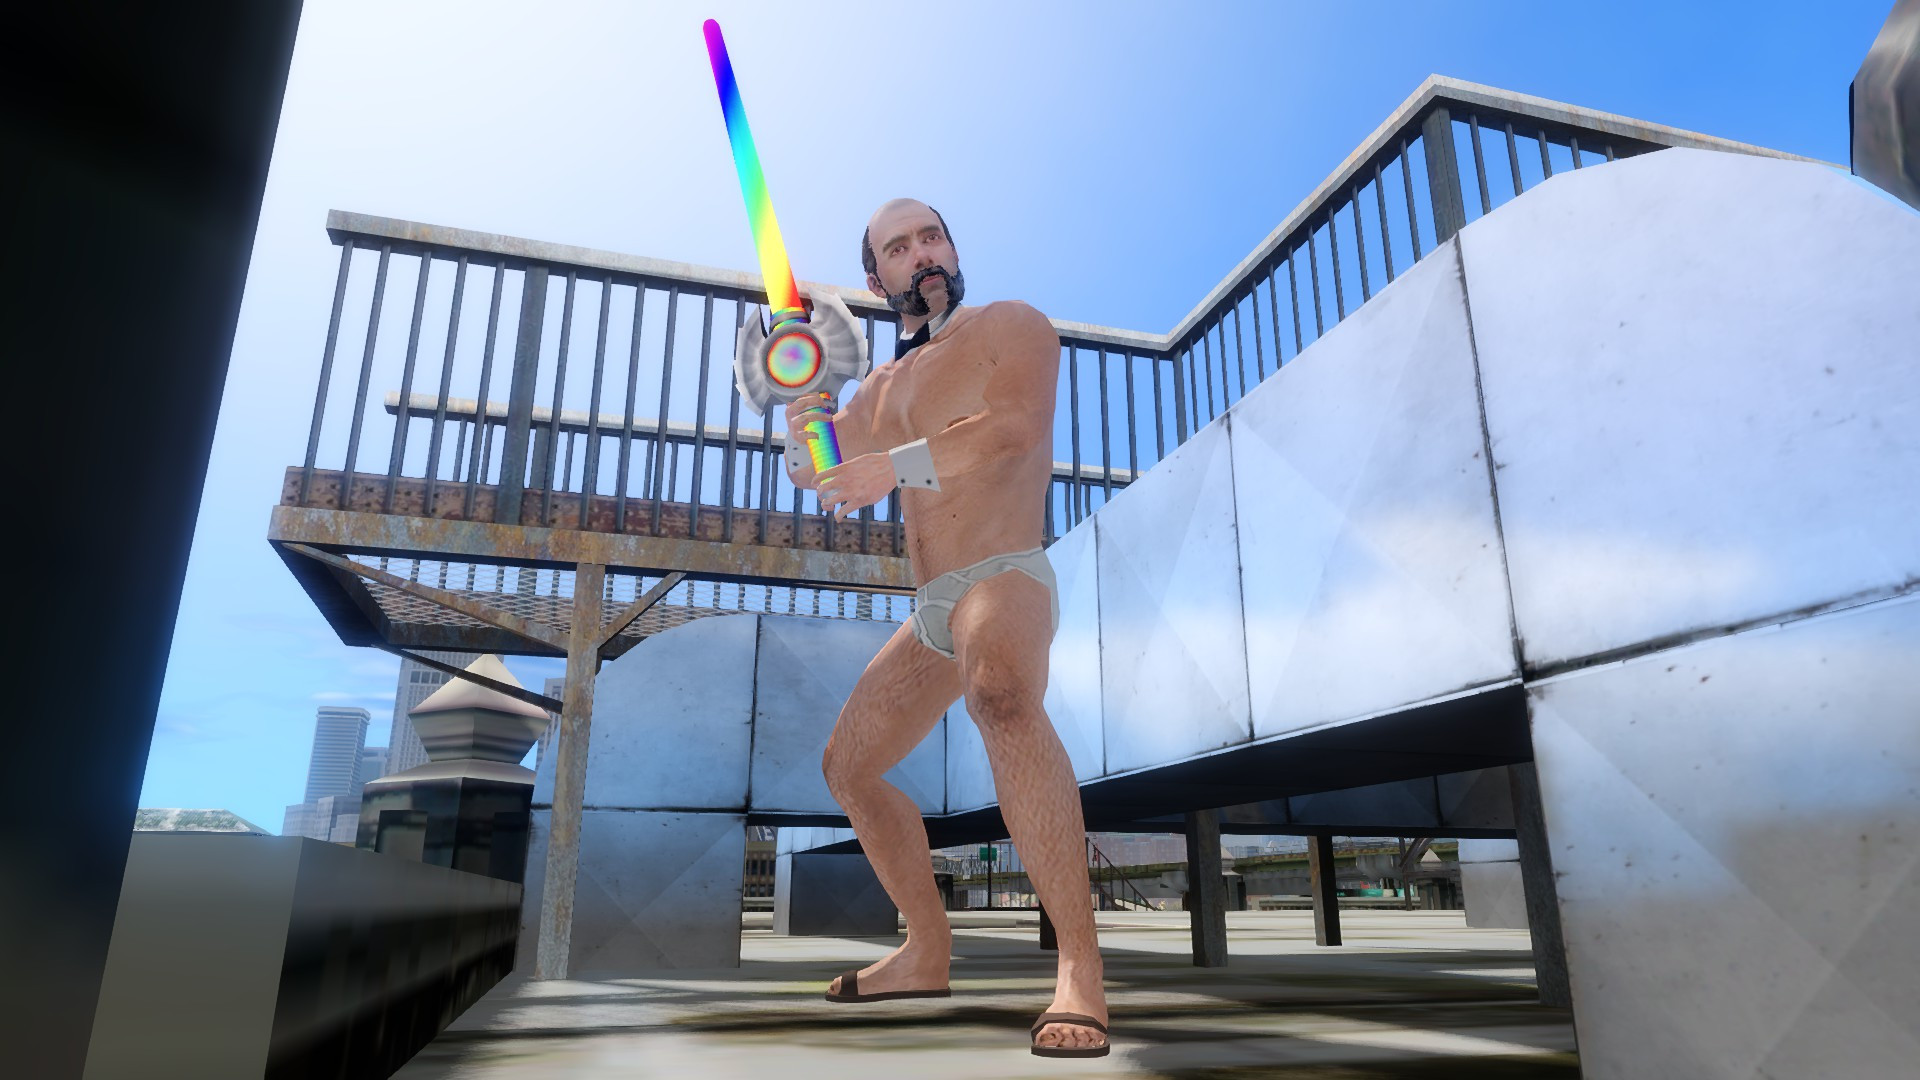 Rainbow Periastron Omega Grand Theft Auto Iv Mods - rainbow periastron omega roblox id